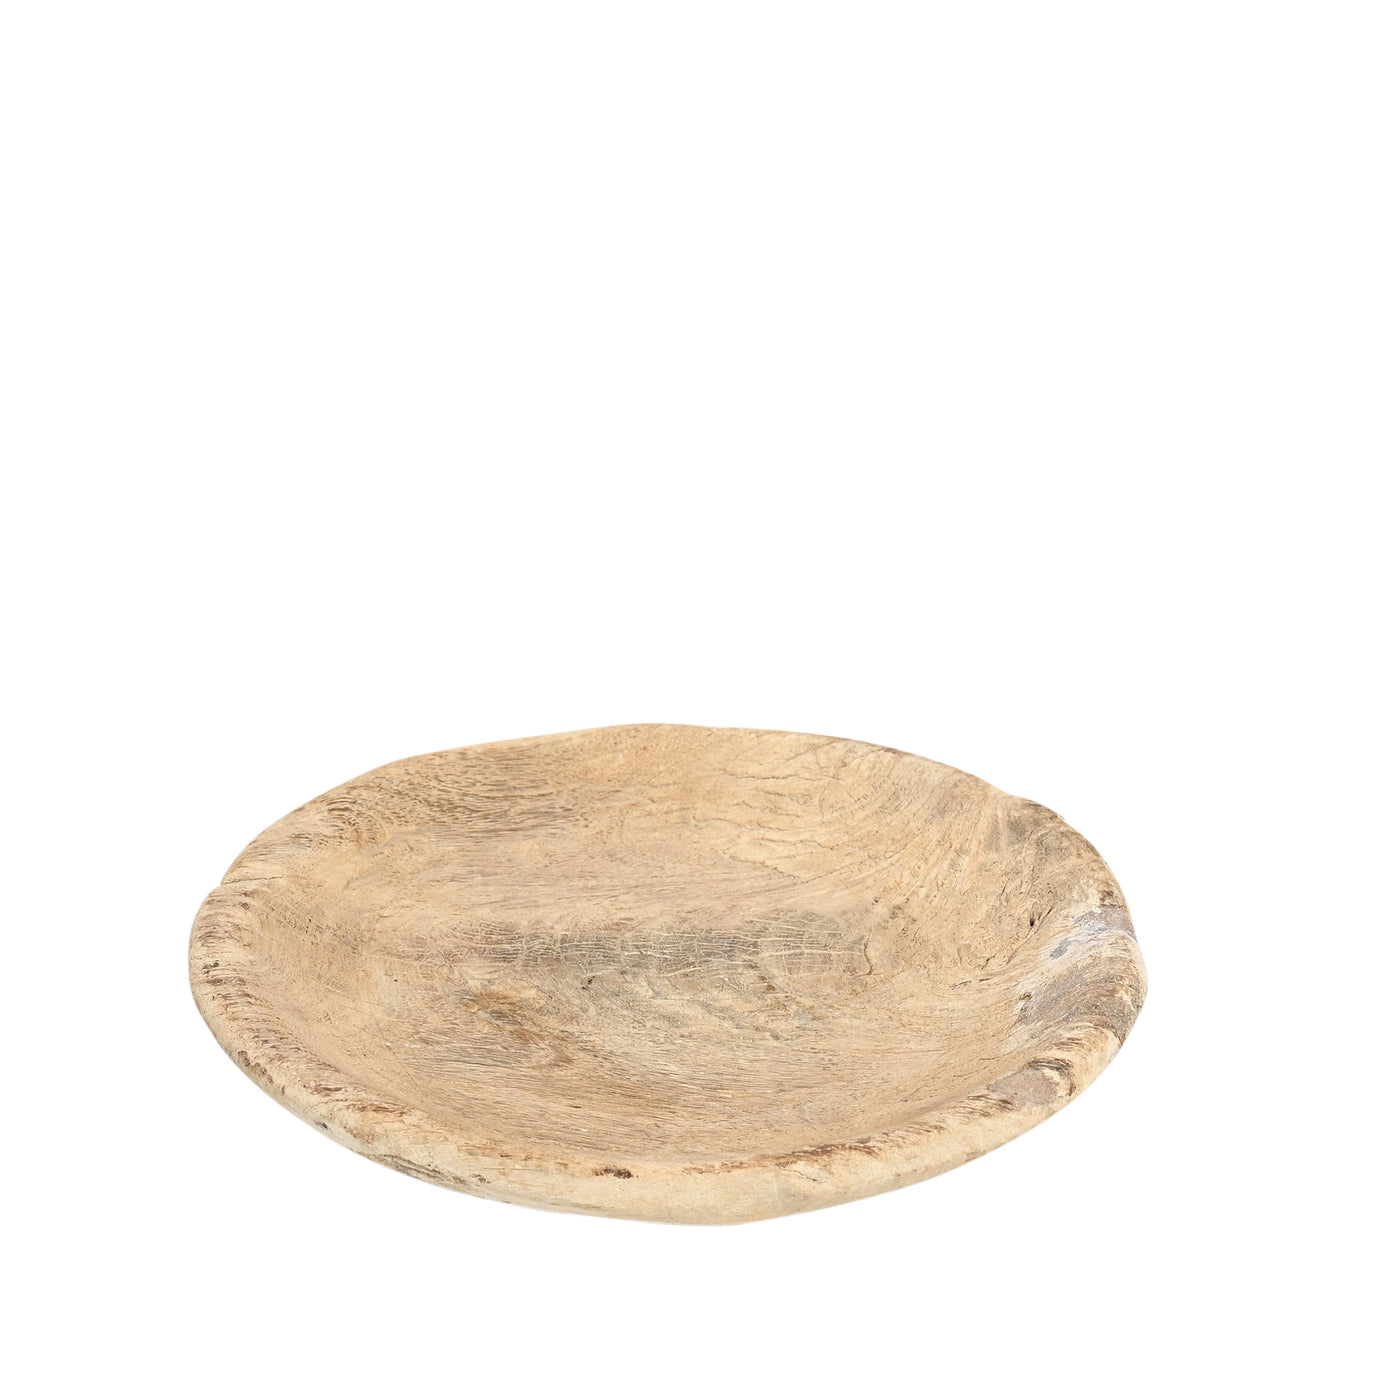 Katora - Wooden plate n ° 17